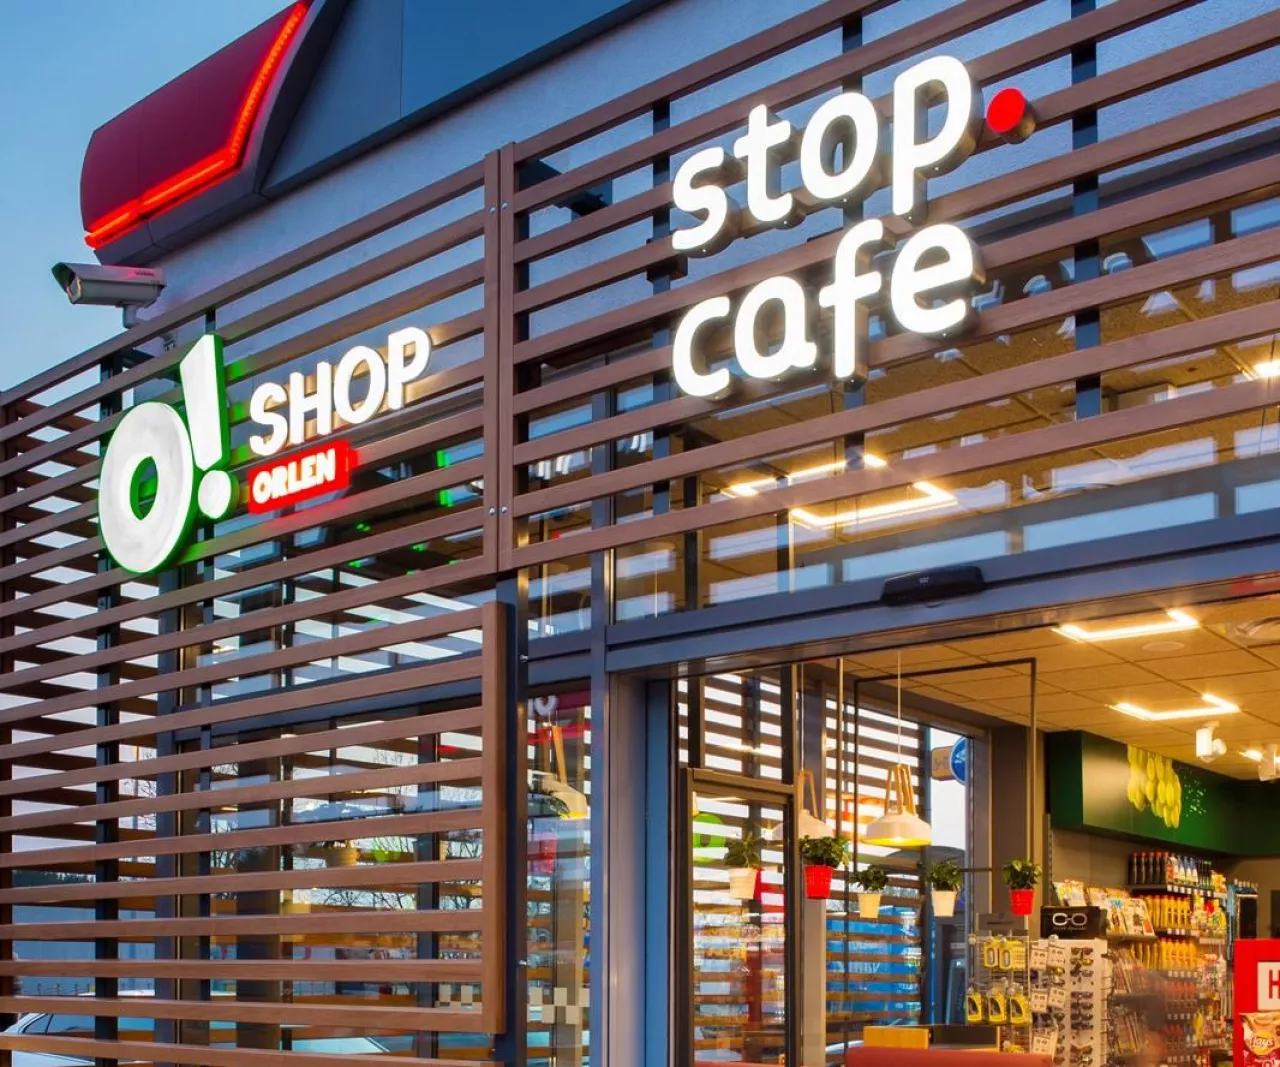 O! Shop Orlen Stop Cafe (materiały prasowe)